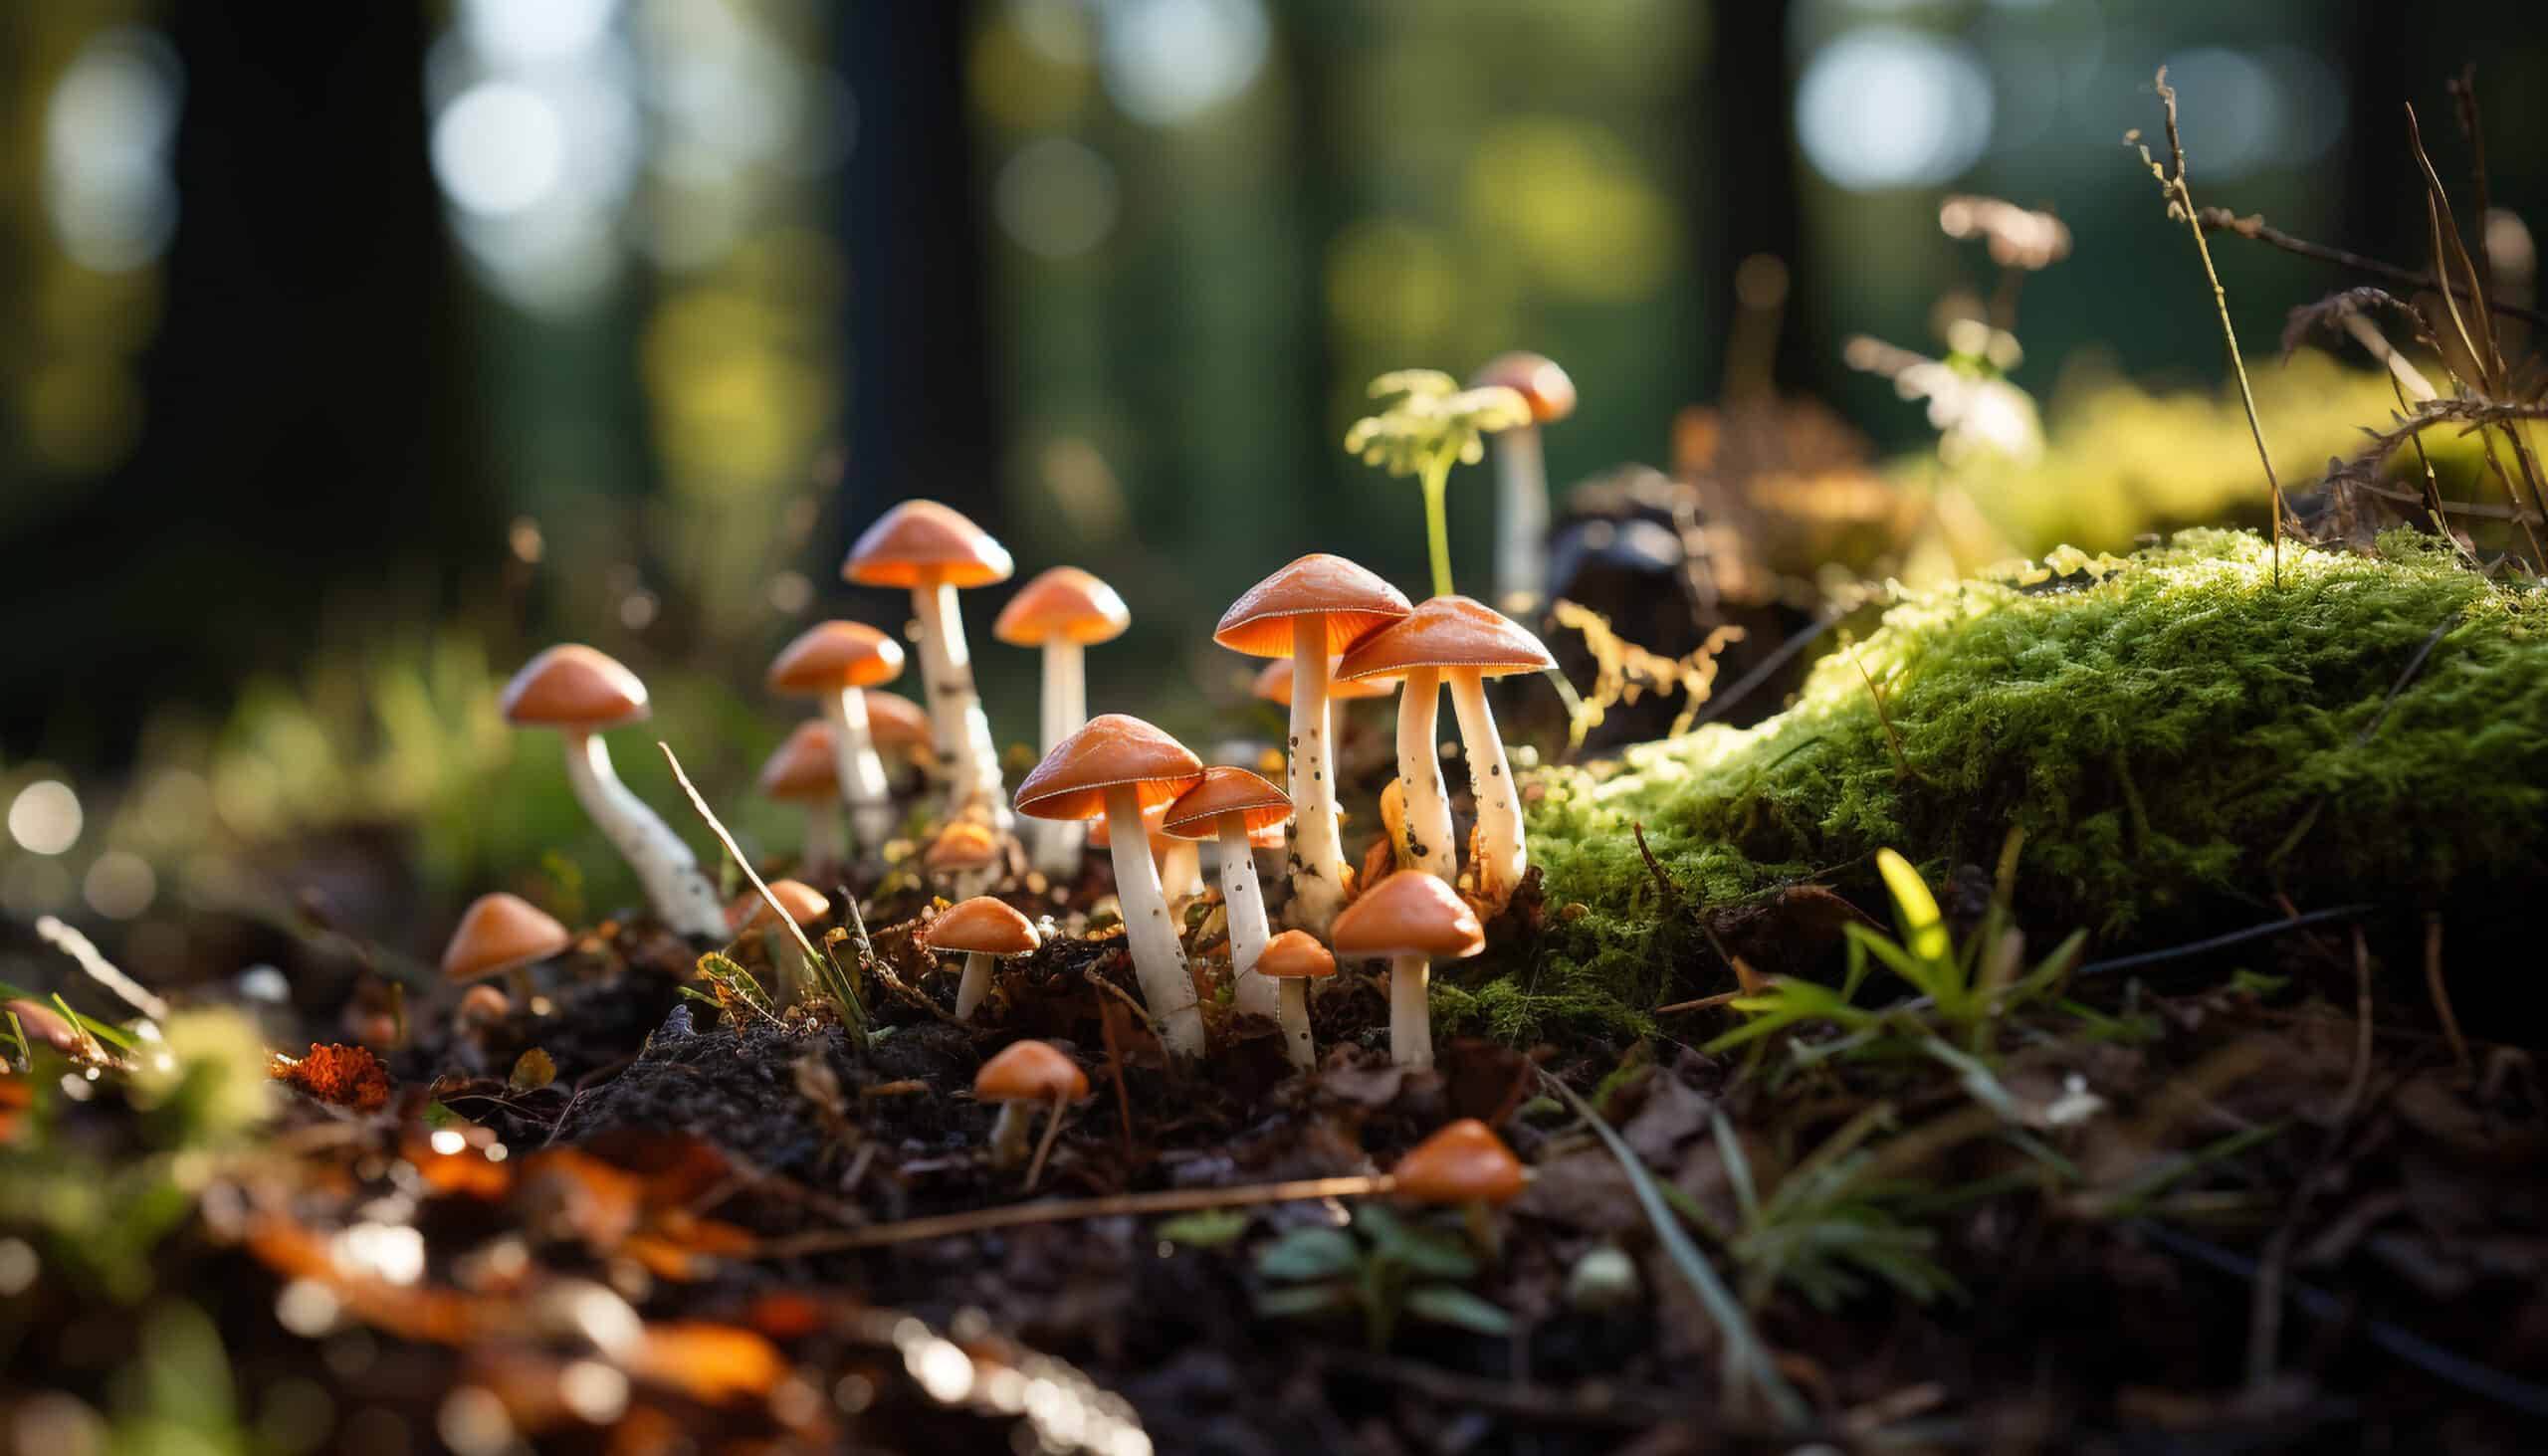 growmyownhealthfood.com : Is it feasible to grow mushrooms outdoors?